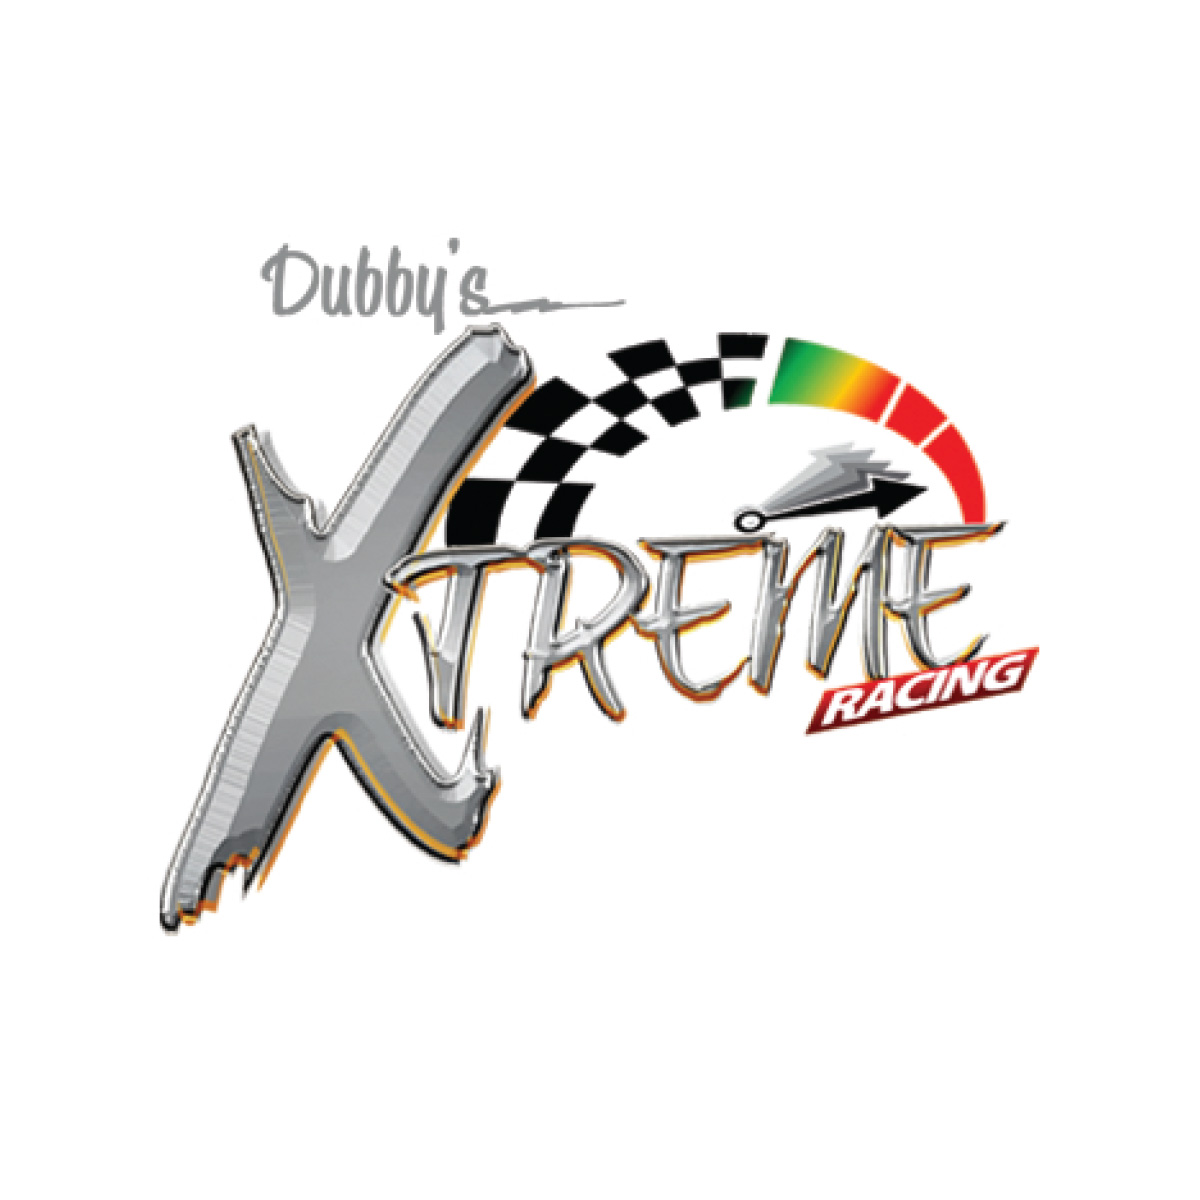 Xtreme Racing Center 2019 SMCB Logo.jpg